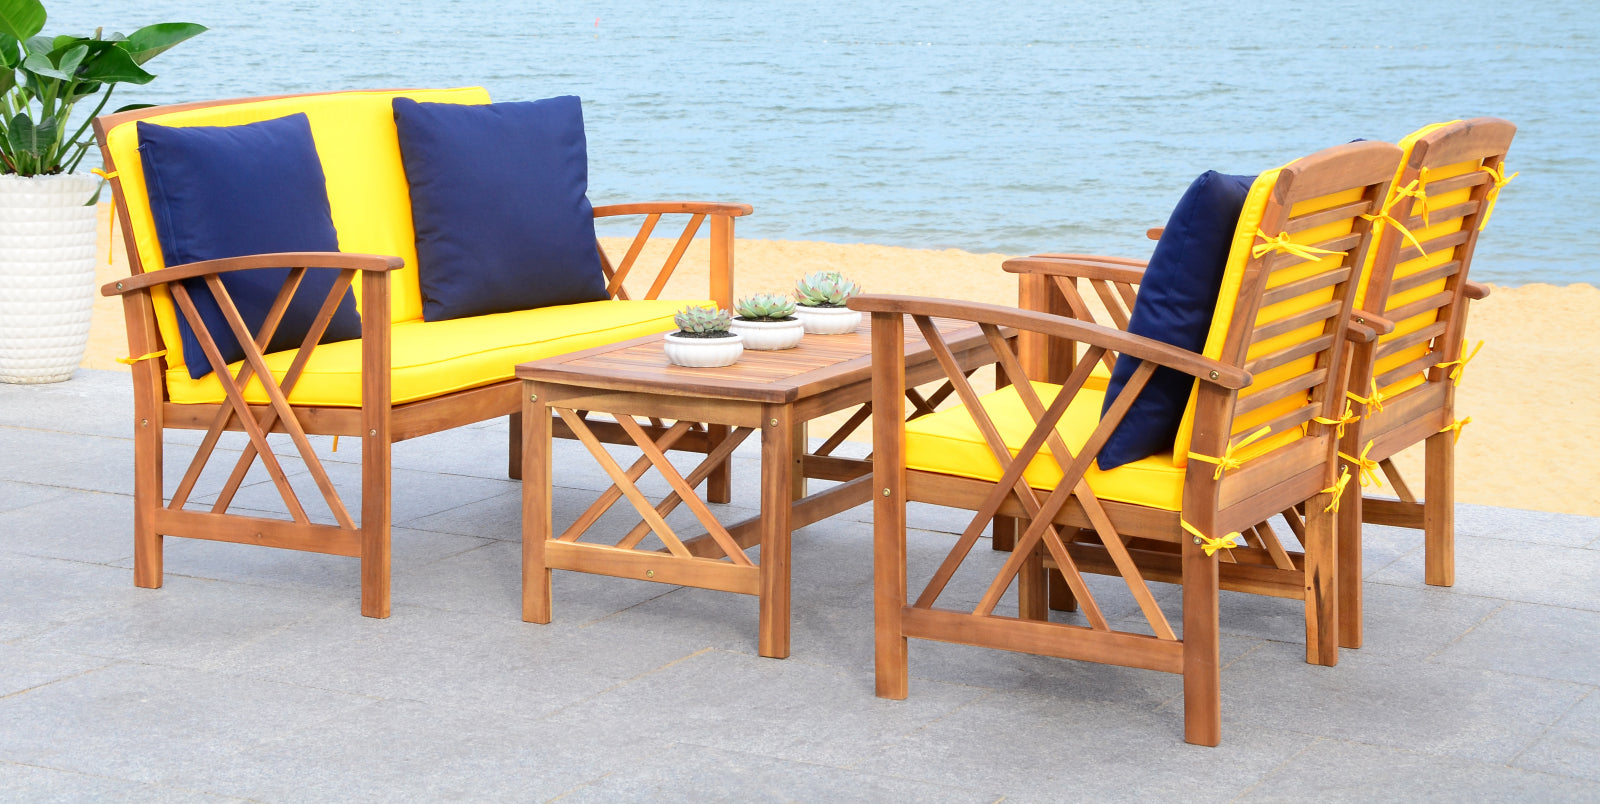 Safavieh Fontana 4 Pc Outdoor Set Teak Look/Yellow Furniture main image